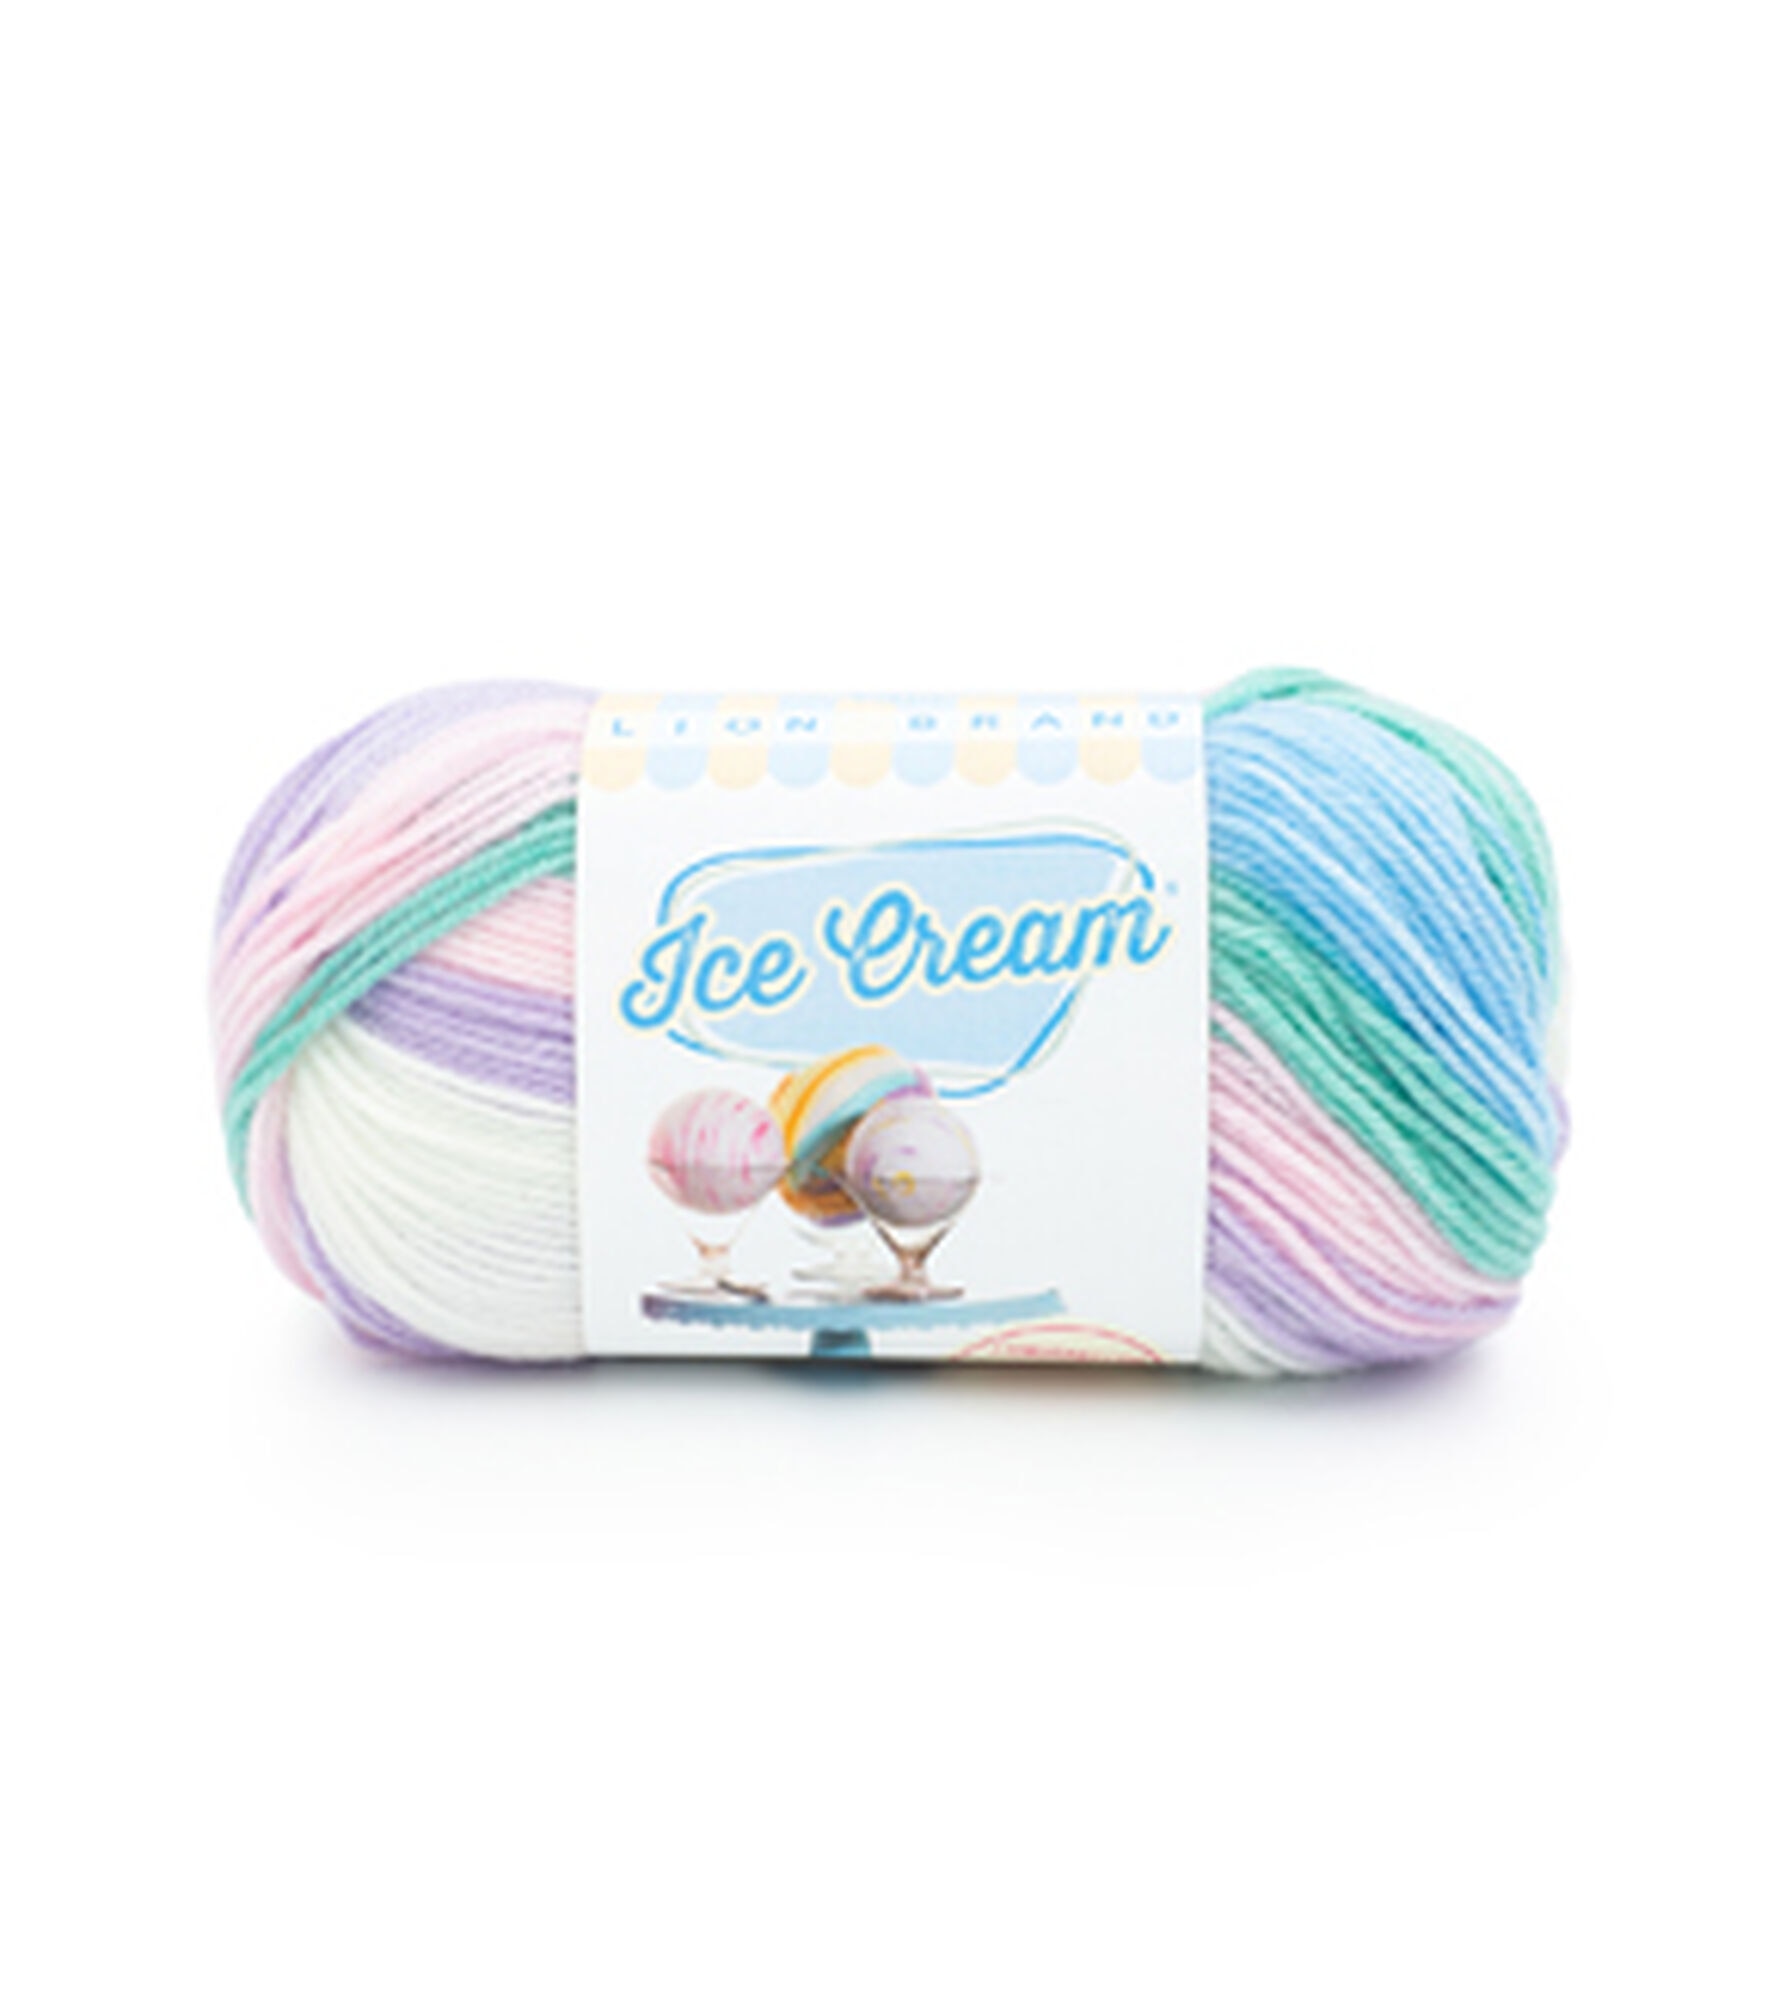 Lion Brand Ice Cream Yarn - Cotton Candy - Cream Pastel Pink